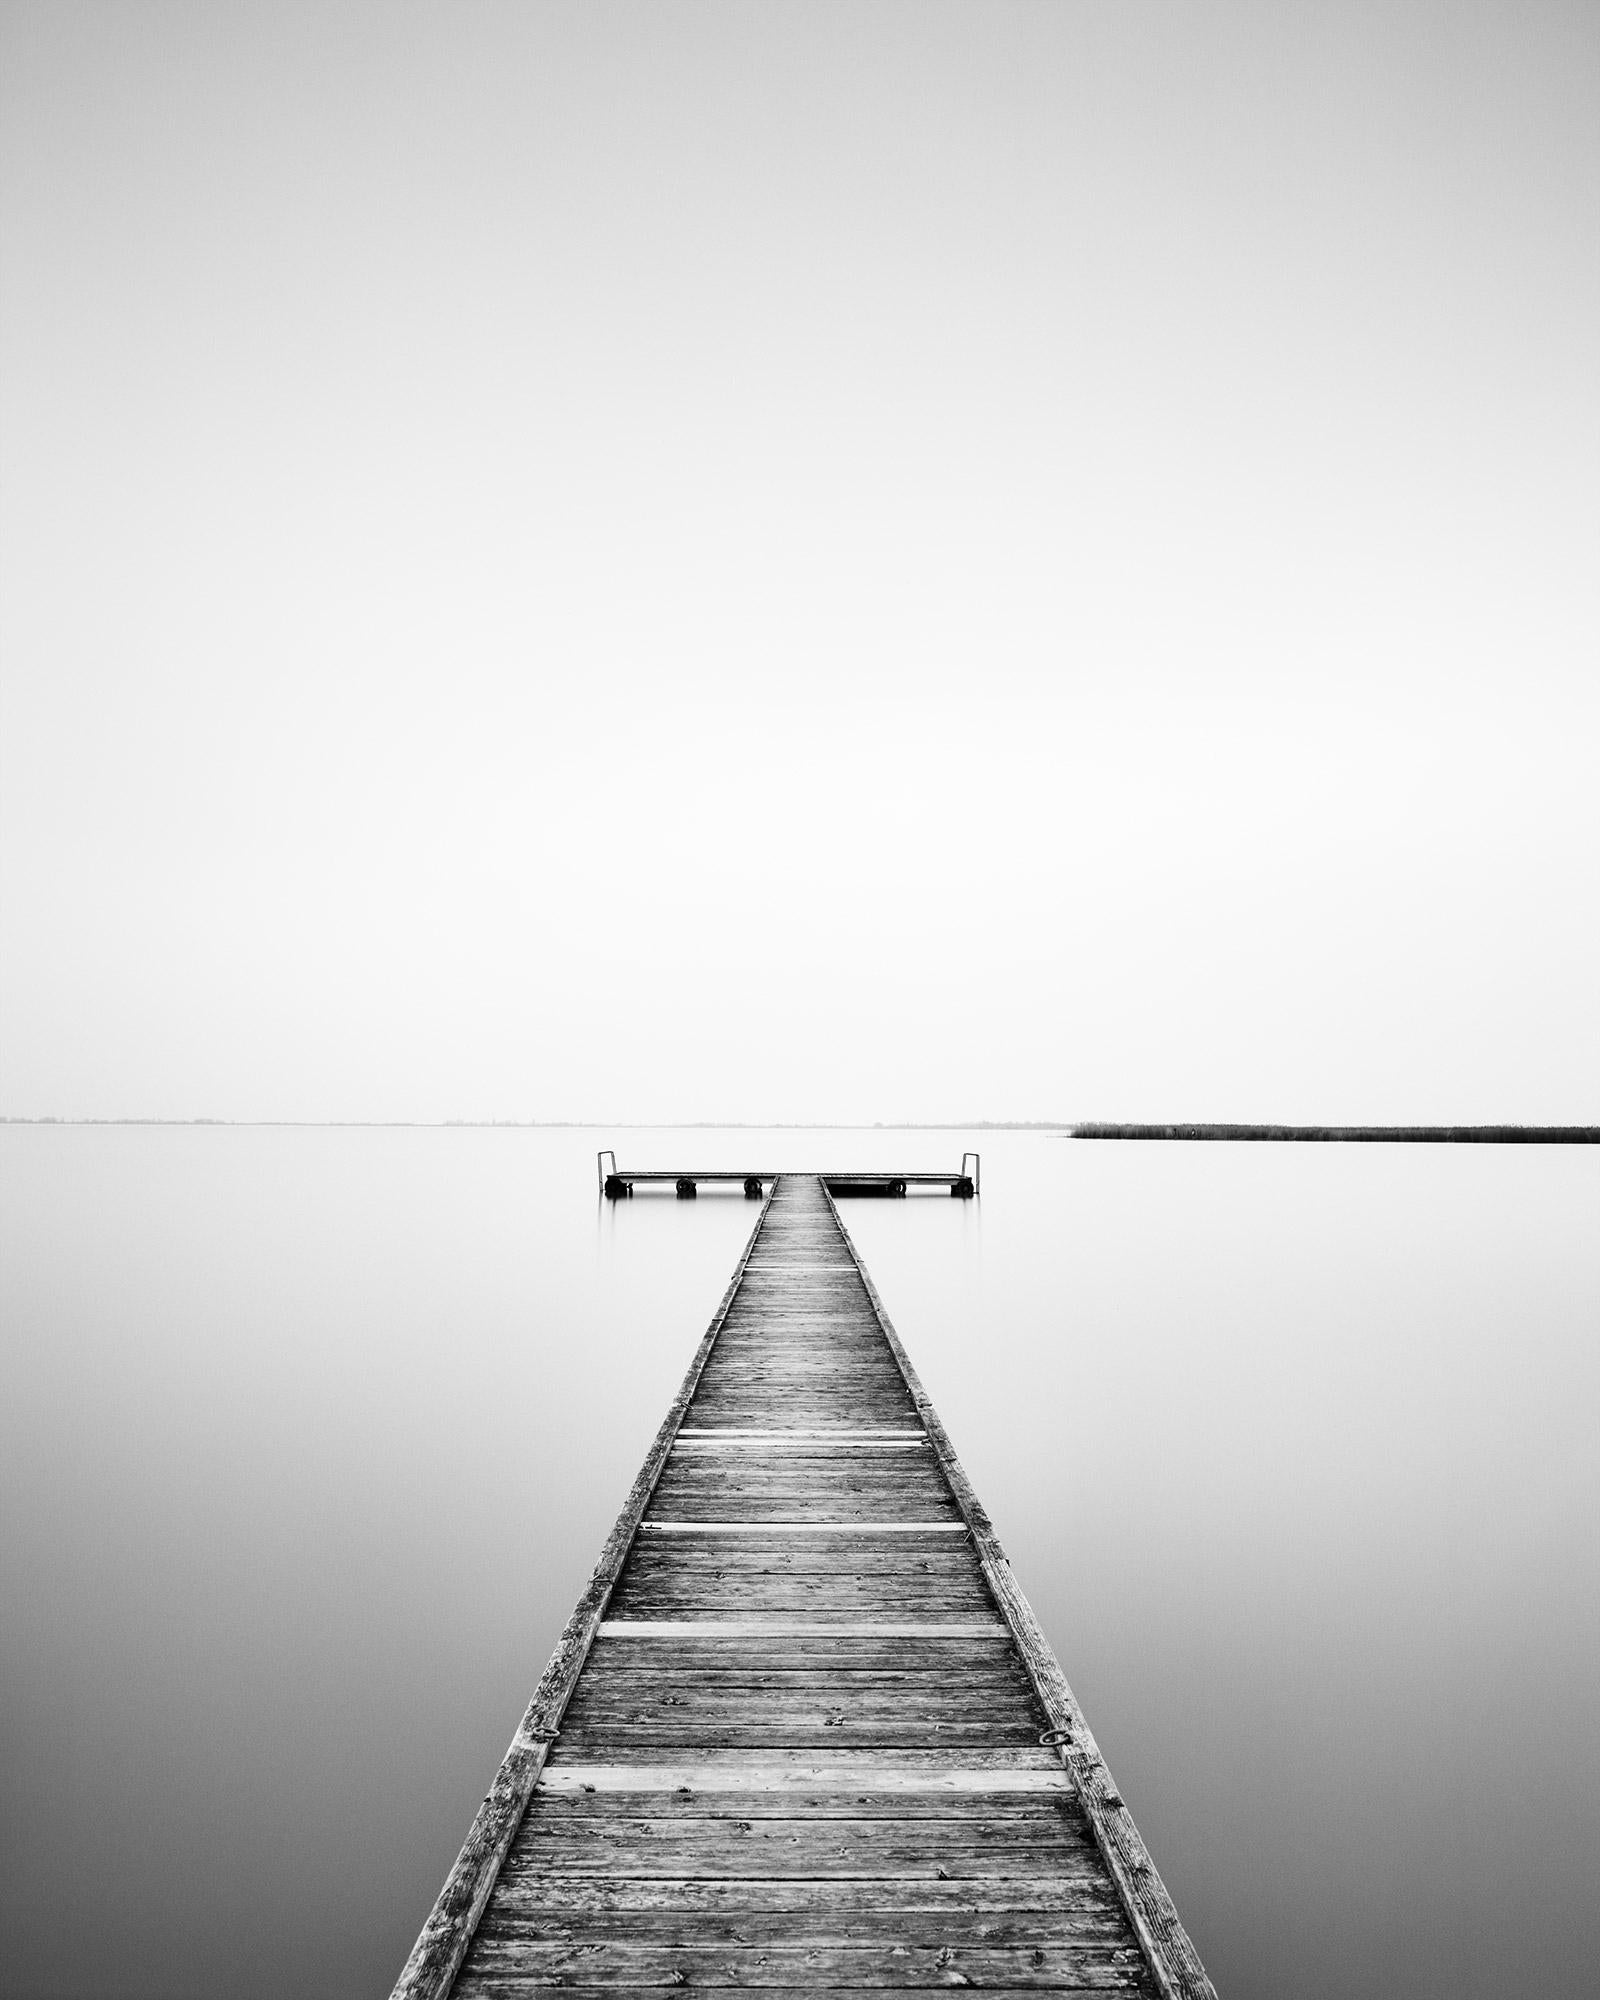 Gerald Berghammer Landscape Photograph - Wooden Pier on Lake, Austria, black and white fine art photography, landscape